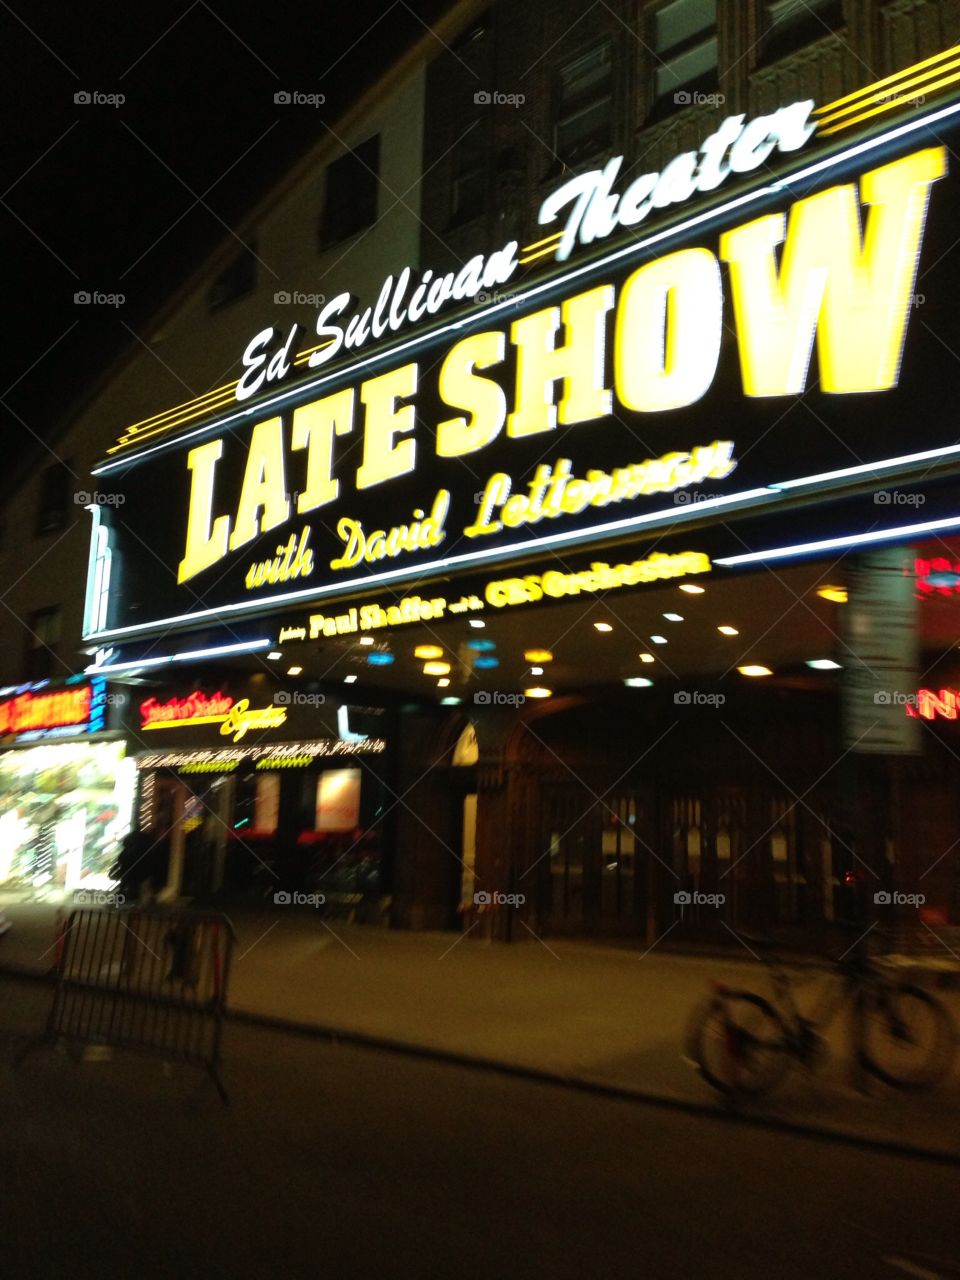 Late night Letterman Era